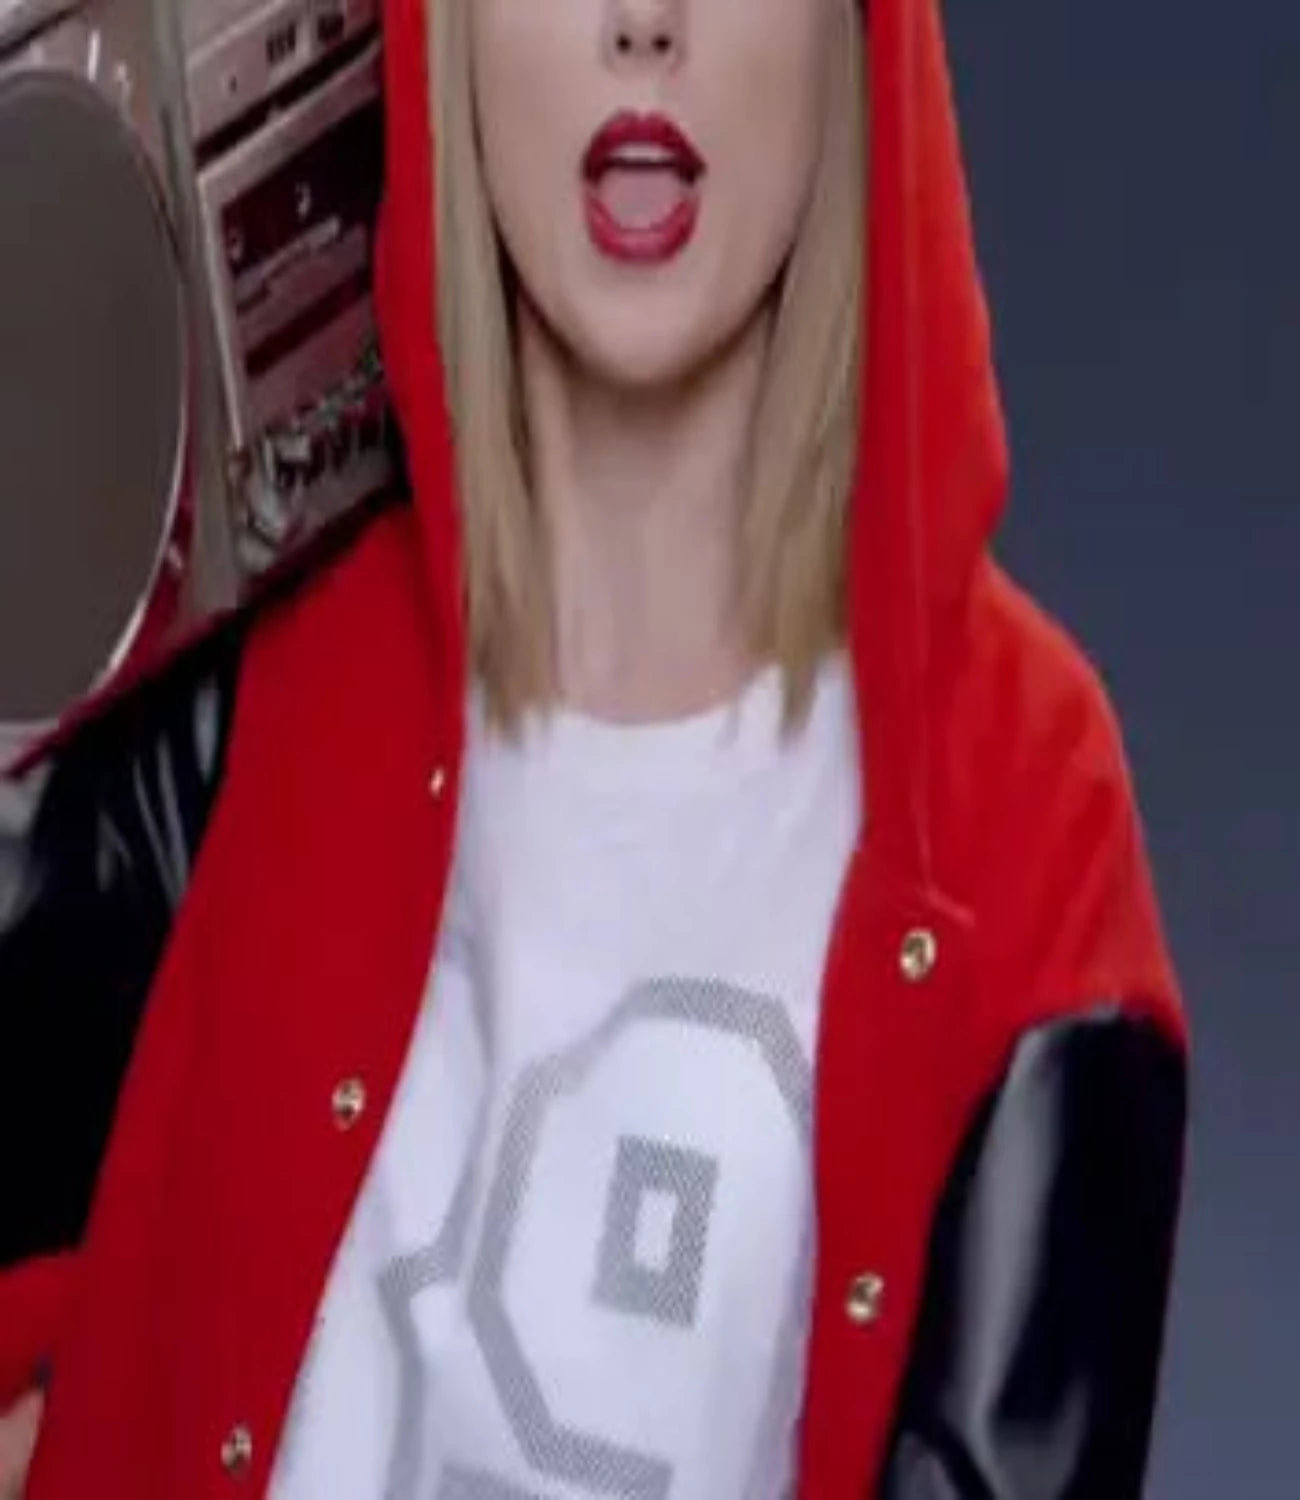 Taylor Swift 1989 Varsity Jacket